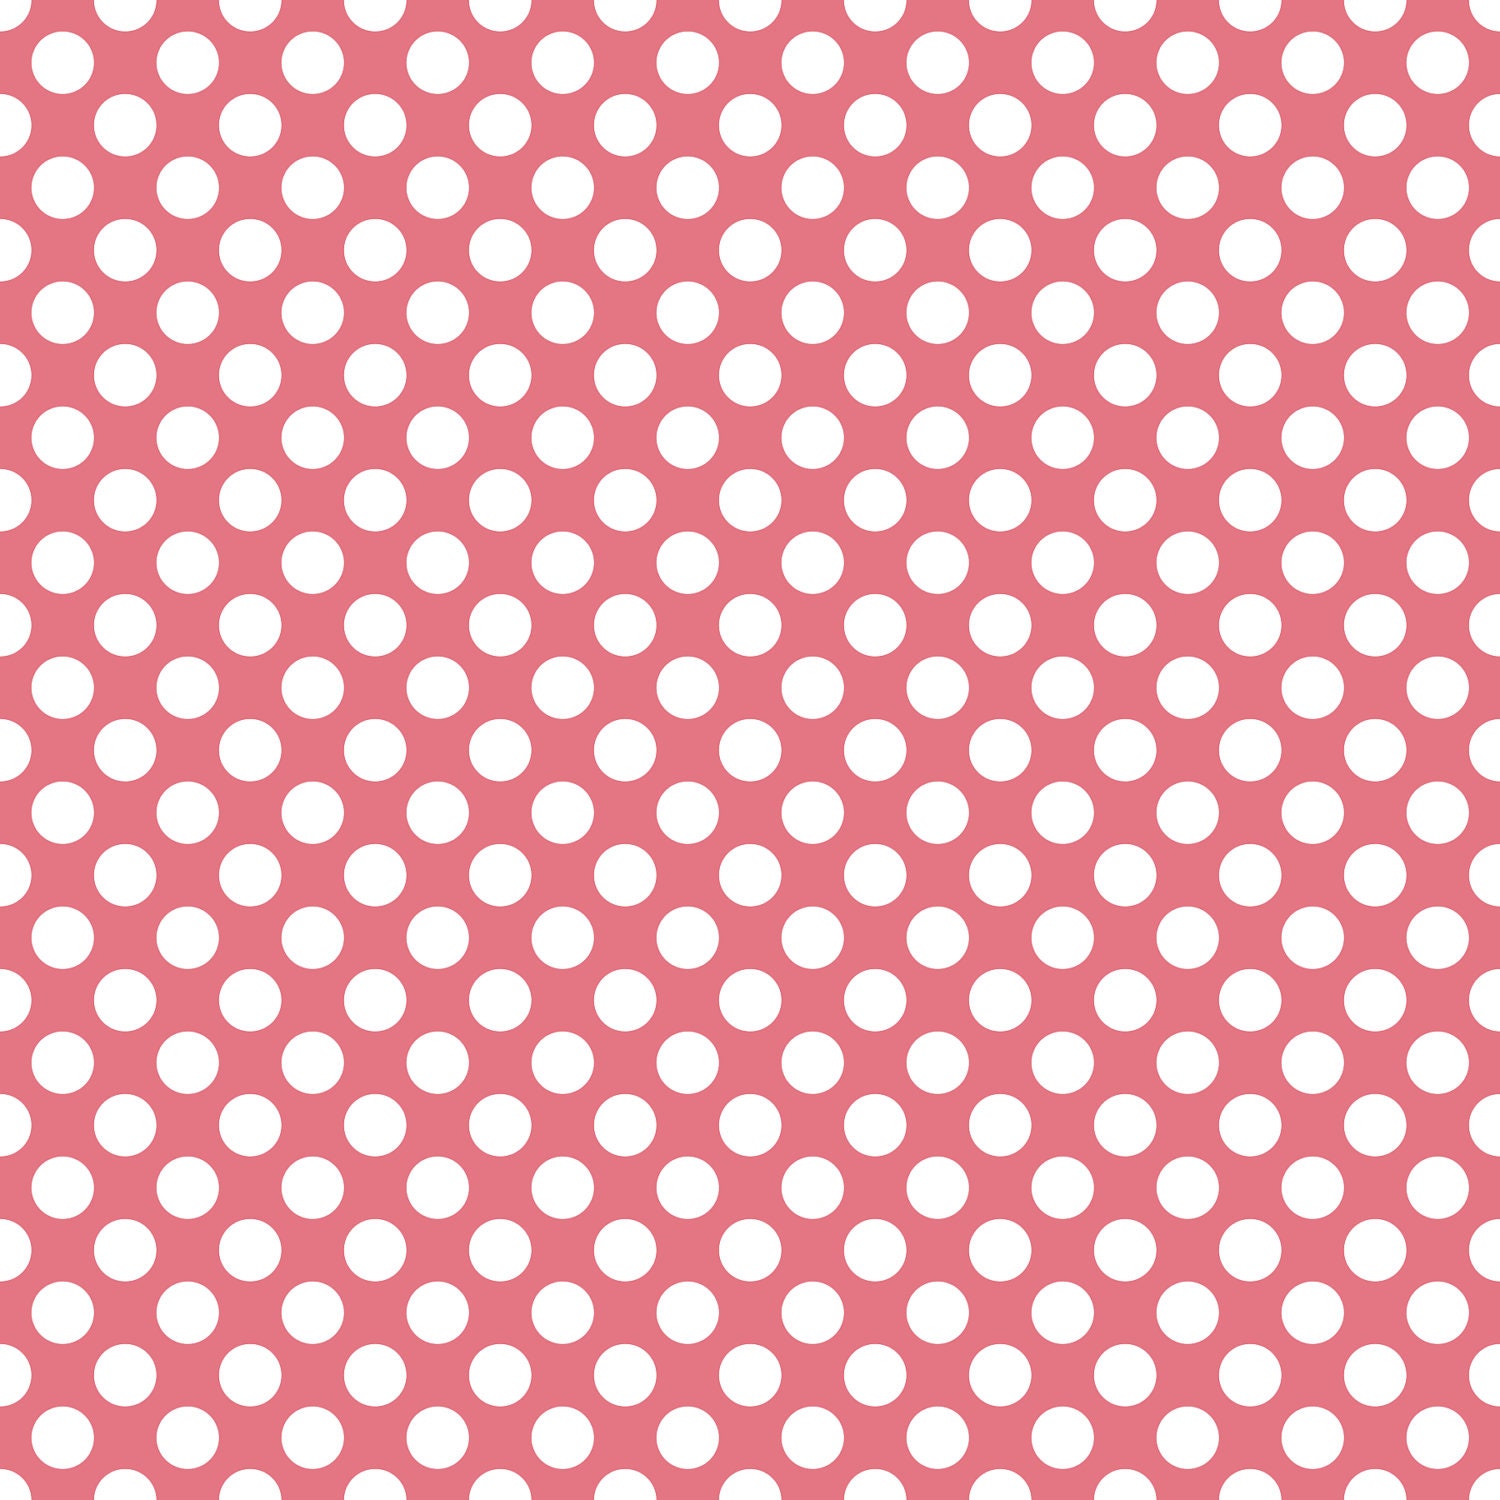 60% OFF SALE Patterned Digital Paper Pack Fun Polka Dots 5 | Etsy